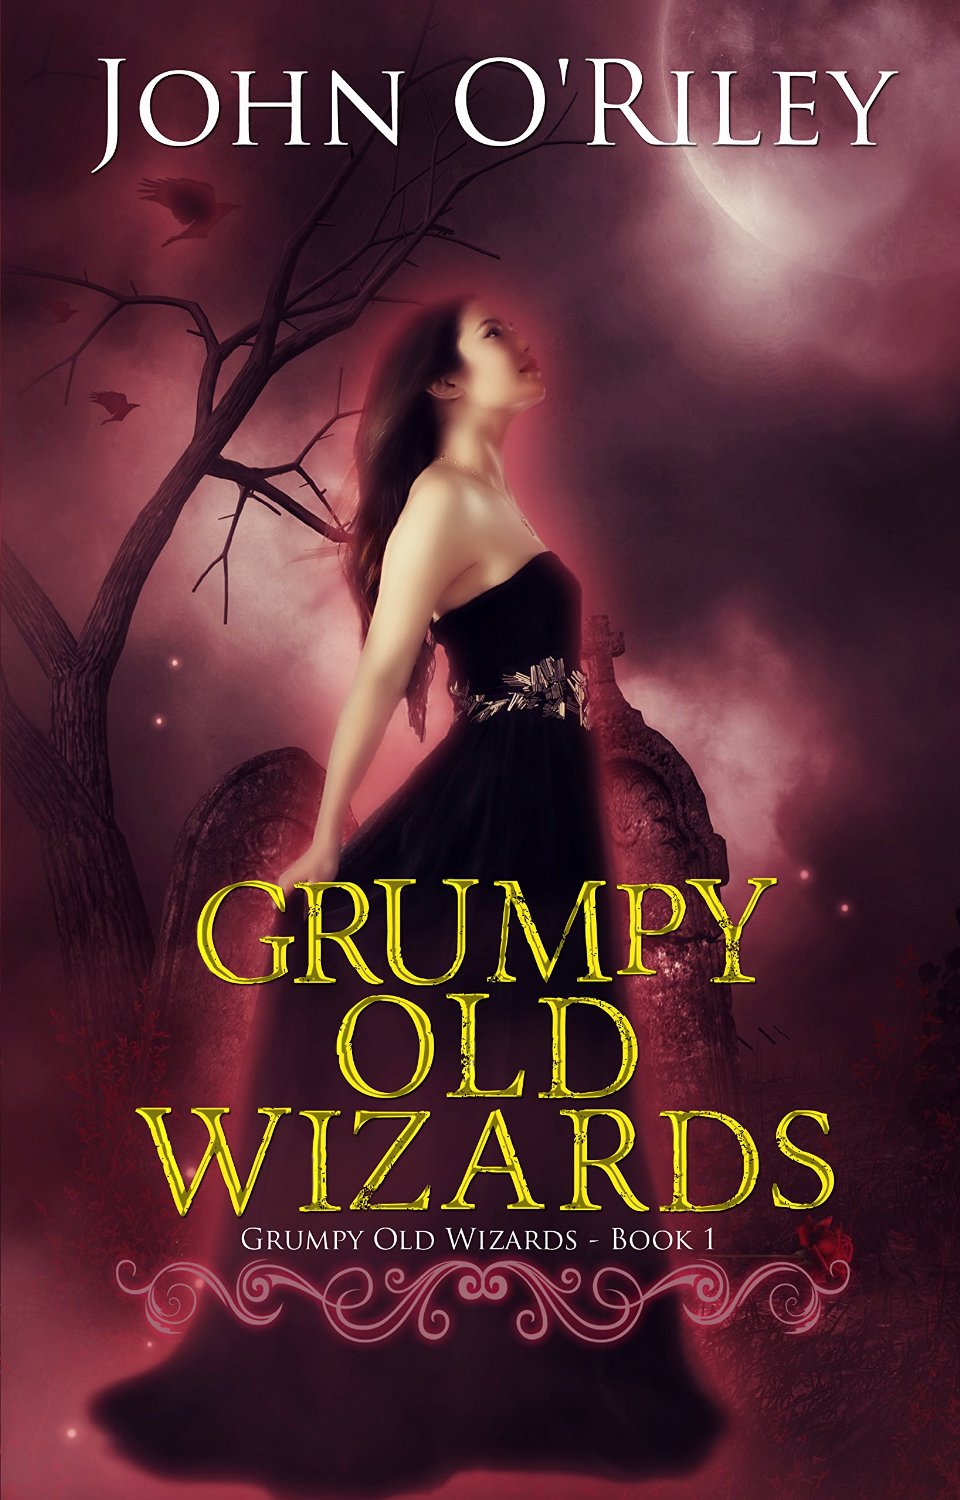 Grumpy Old Wizards by John O’Riley